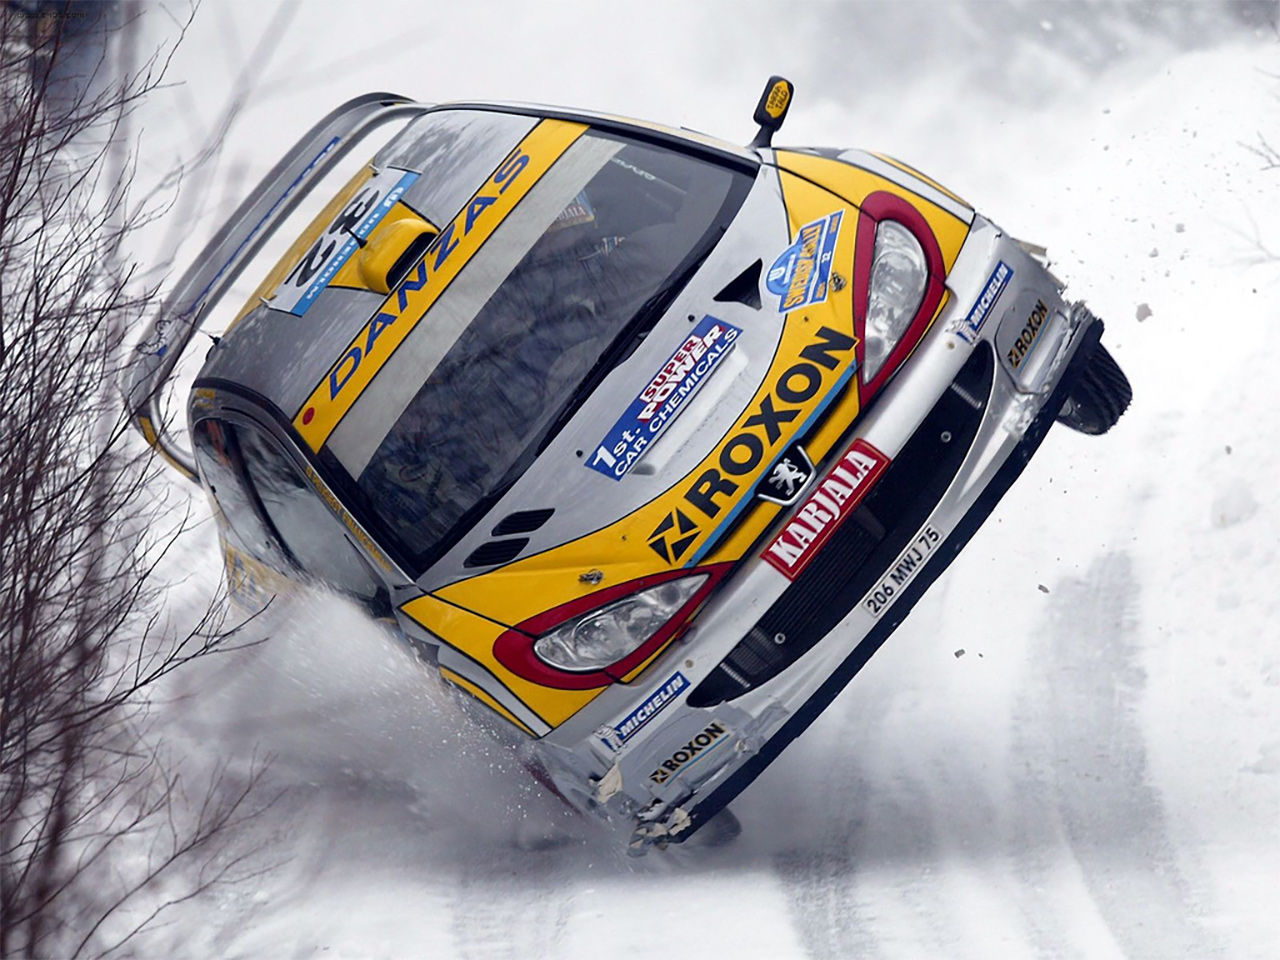 Peugeot 206 rally